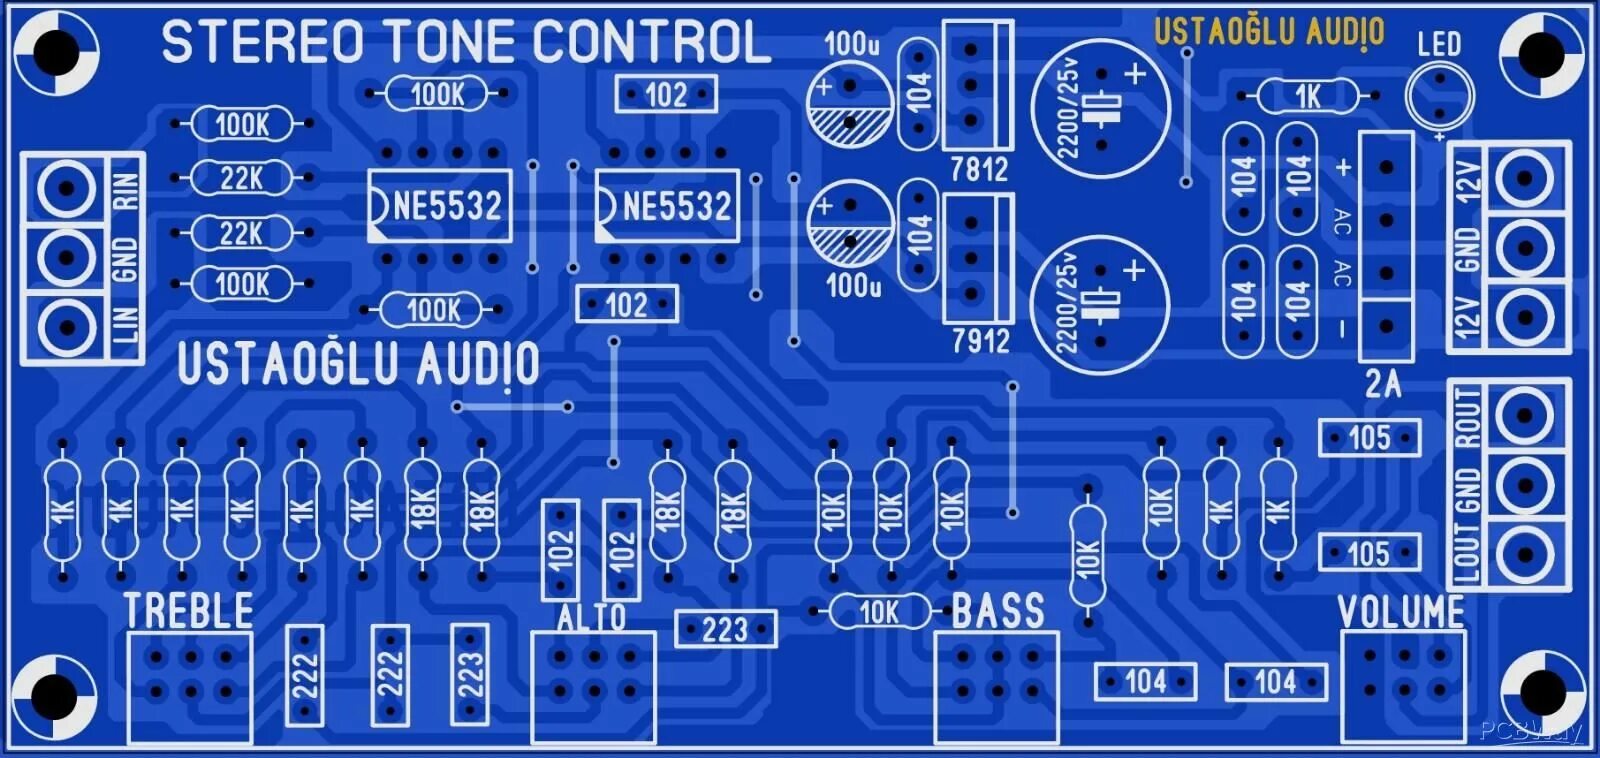 Stereo Tone Control ne5532.. Ne5532. Транзисторная сборка ne5532. Stereo Tone Control diagram circuit. Tone control